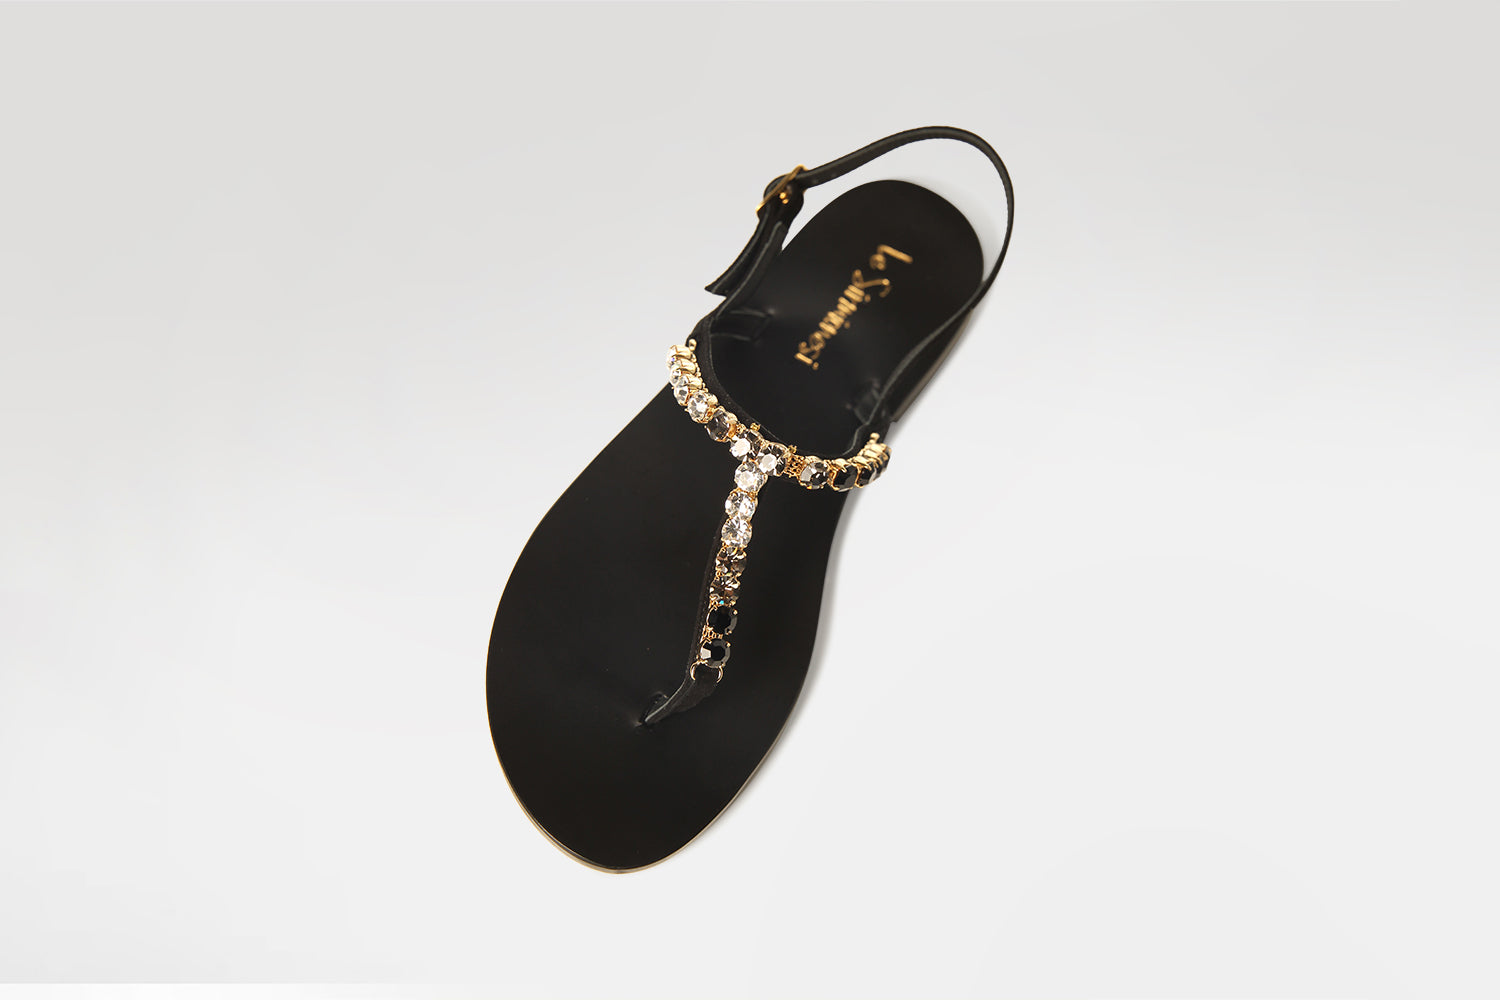 Italian sandals, handmade sandals, flat sandals, crystal sandals, black leather sandals, Swarovski crystal sandals